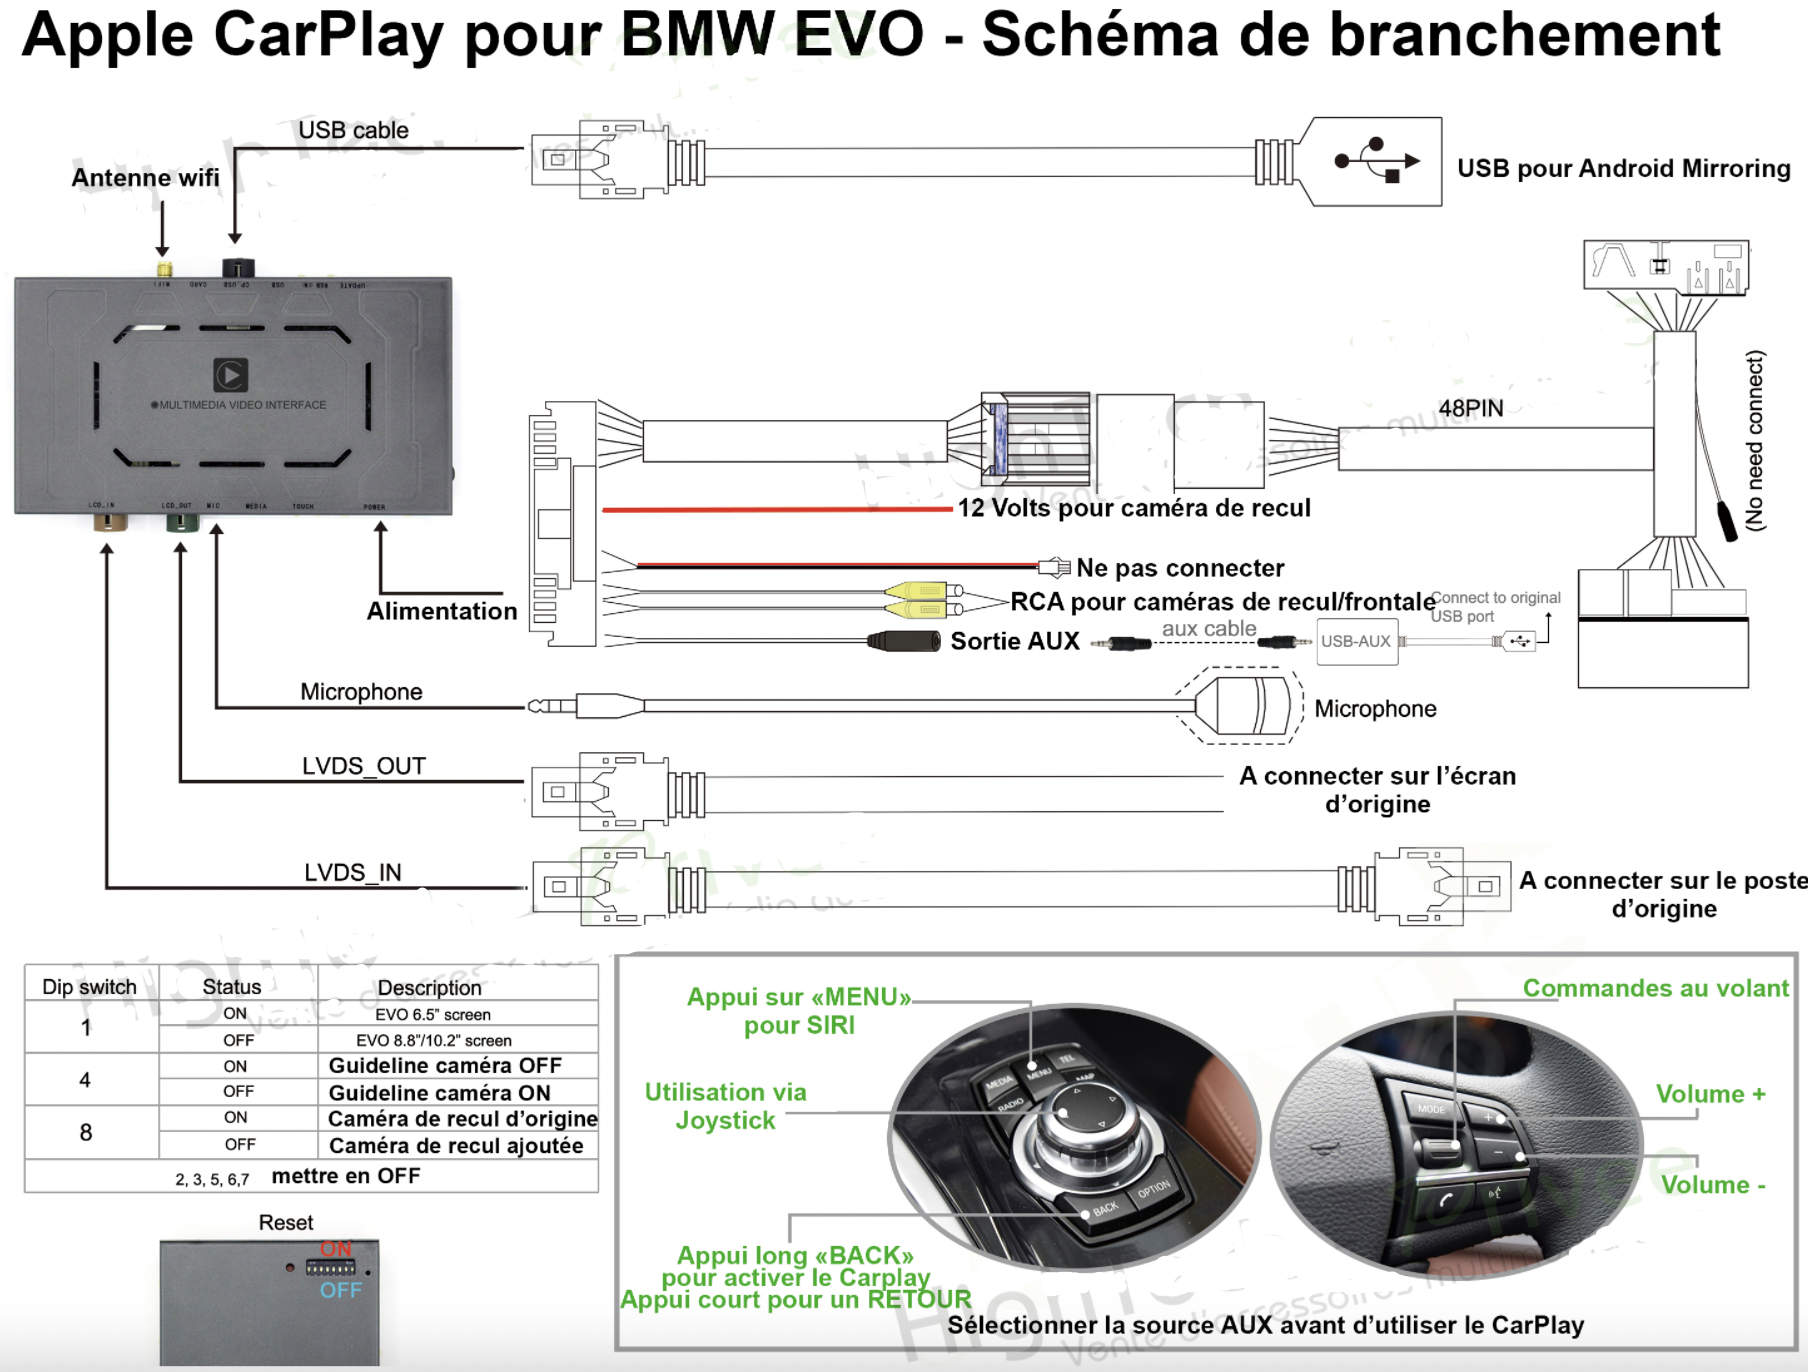 schema branchement carplay bmw evo.png